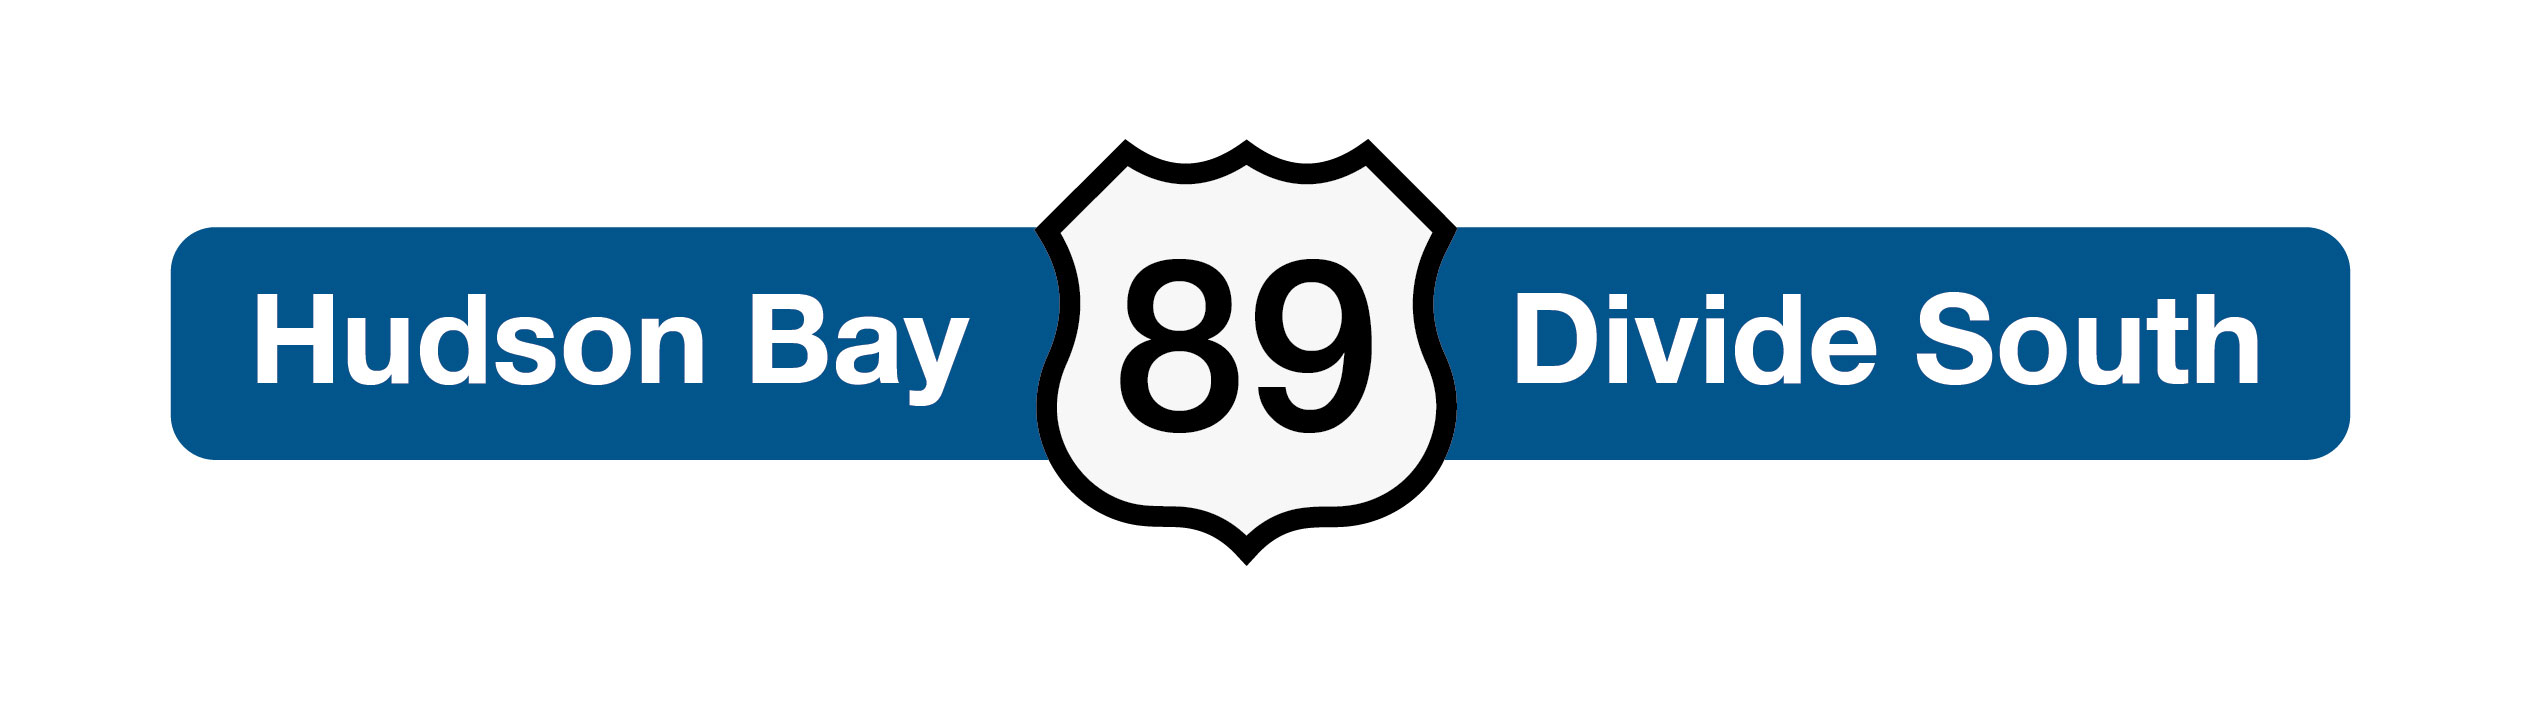 Hudson Bay Divide South – US 89 Roadway Improvements logo